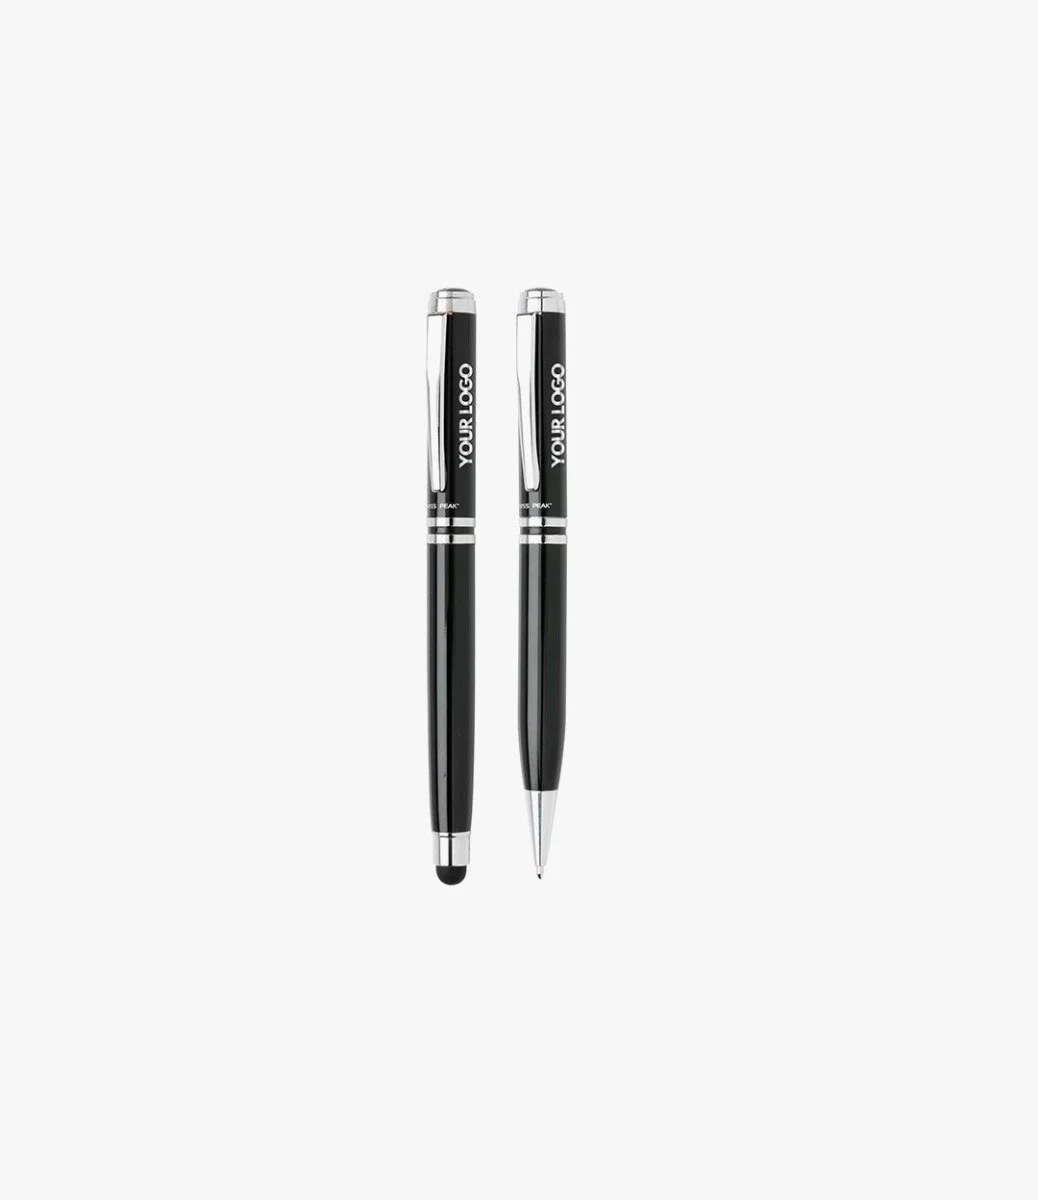 Dusco Set - Swiss Peak Executive Pen Set - Black/Silver